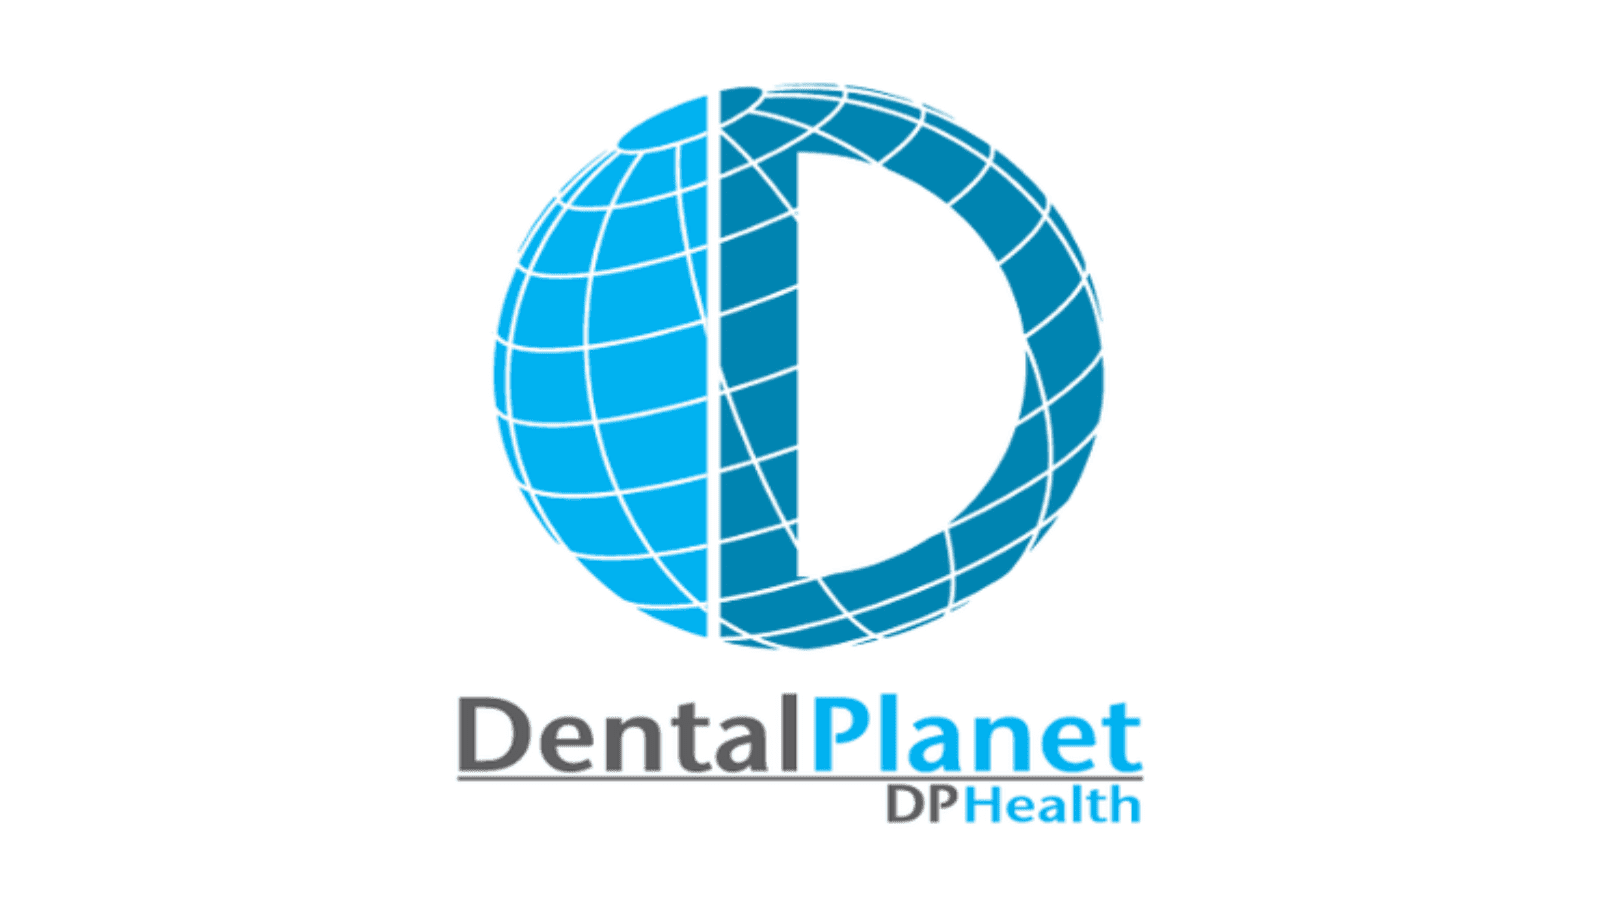 Dental planet logo